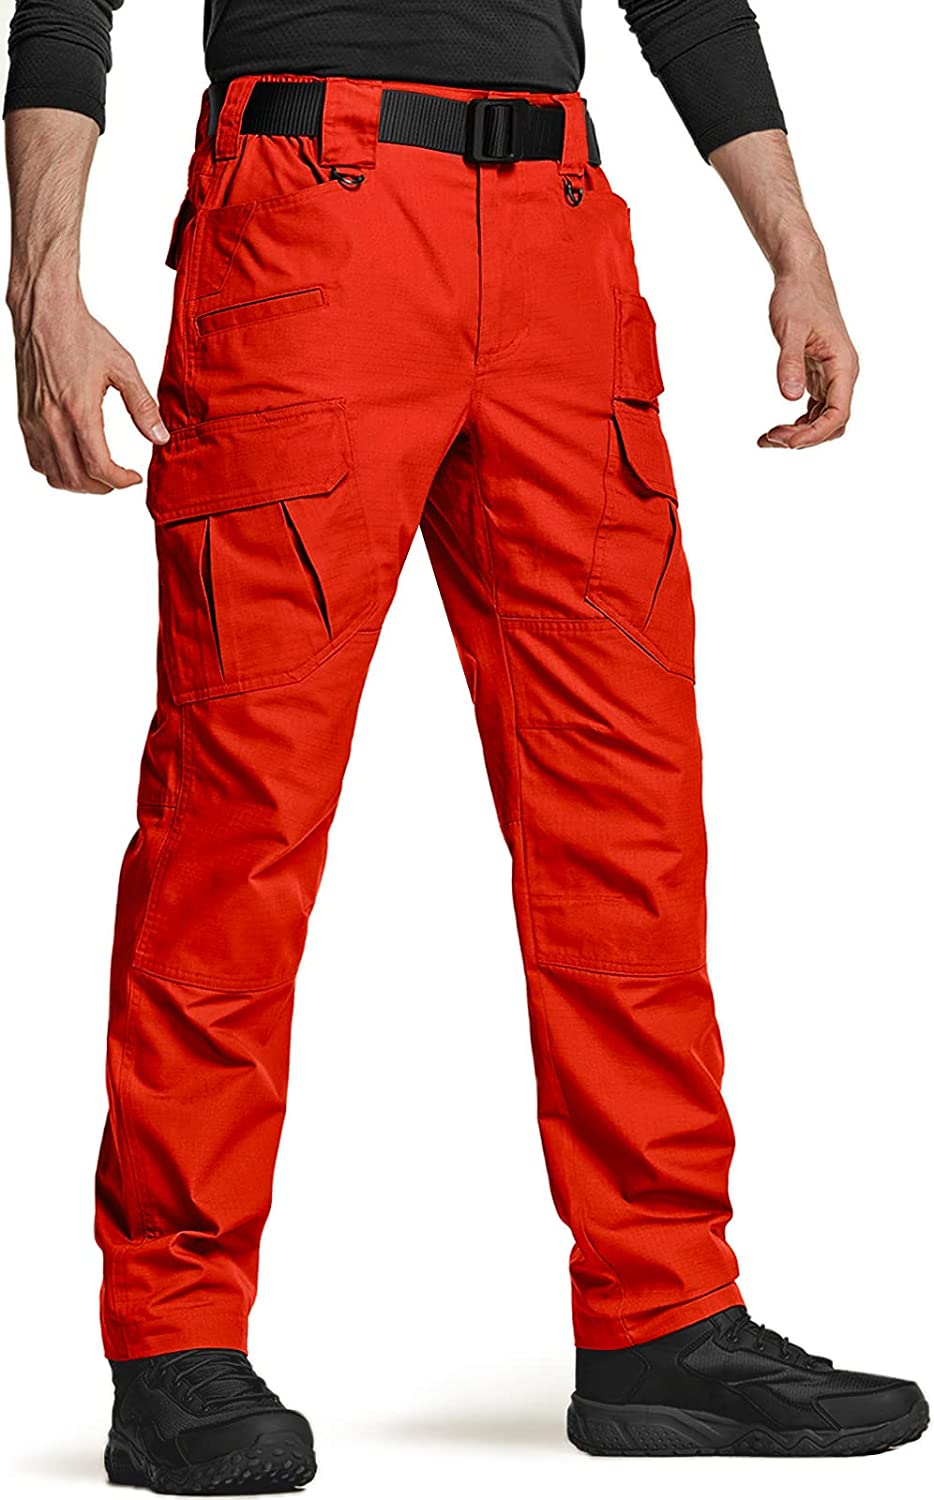 CQR Men's Tactical Pants Outdoor Apparel Water Repellent Ripstop Cargo Pants Lightweight EDC Hiking Work Pants Duratex Ripstop Midnight Navy 32W x 30L 